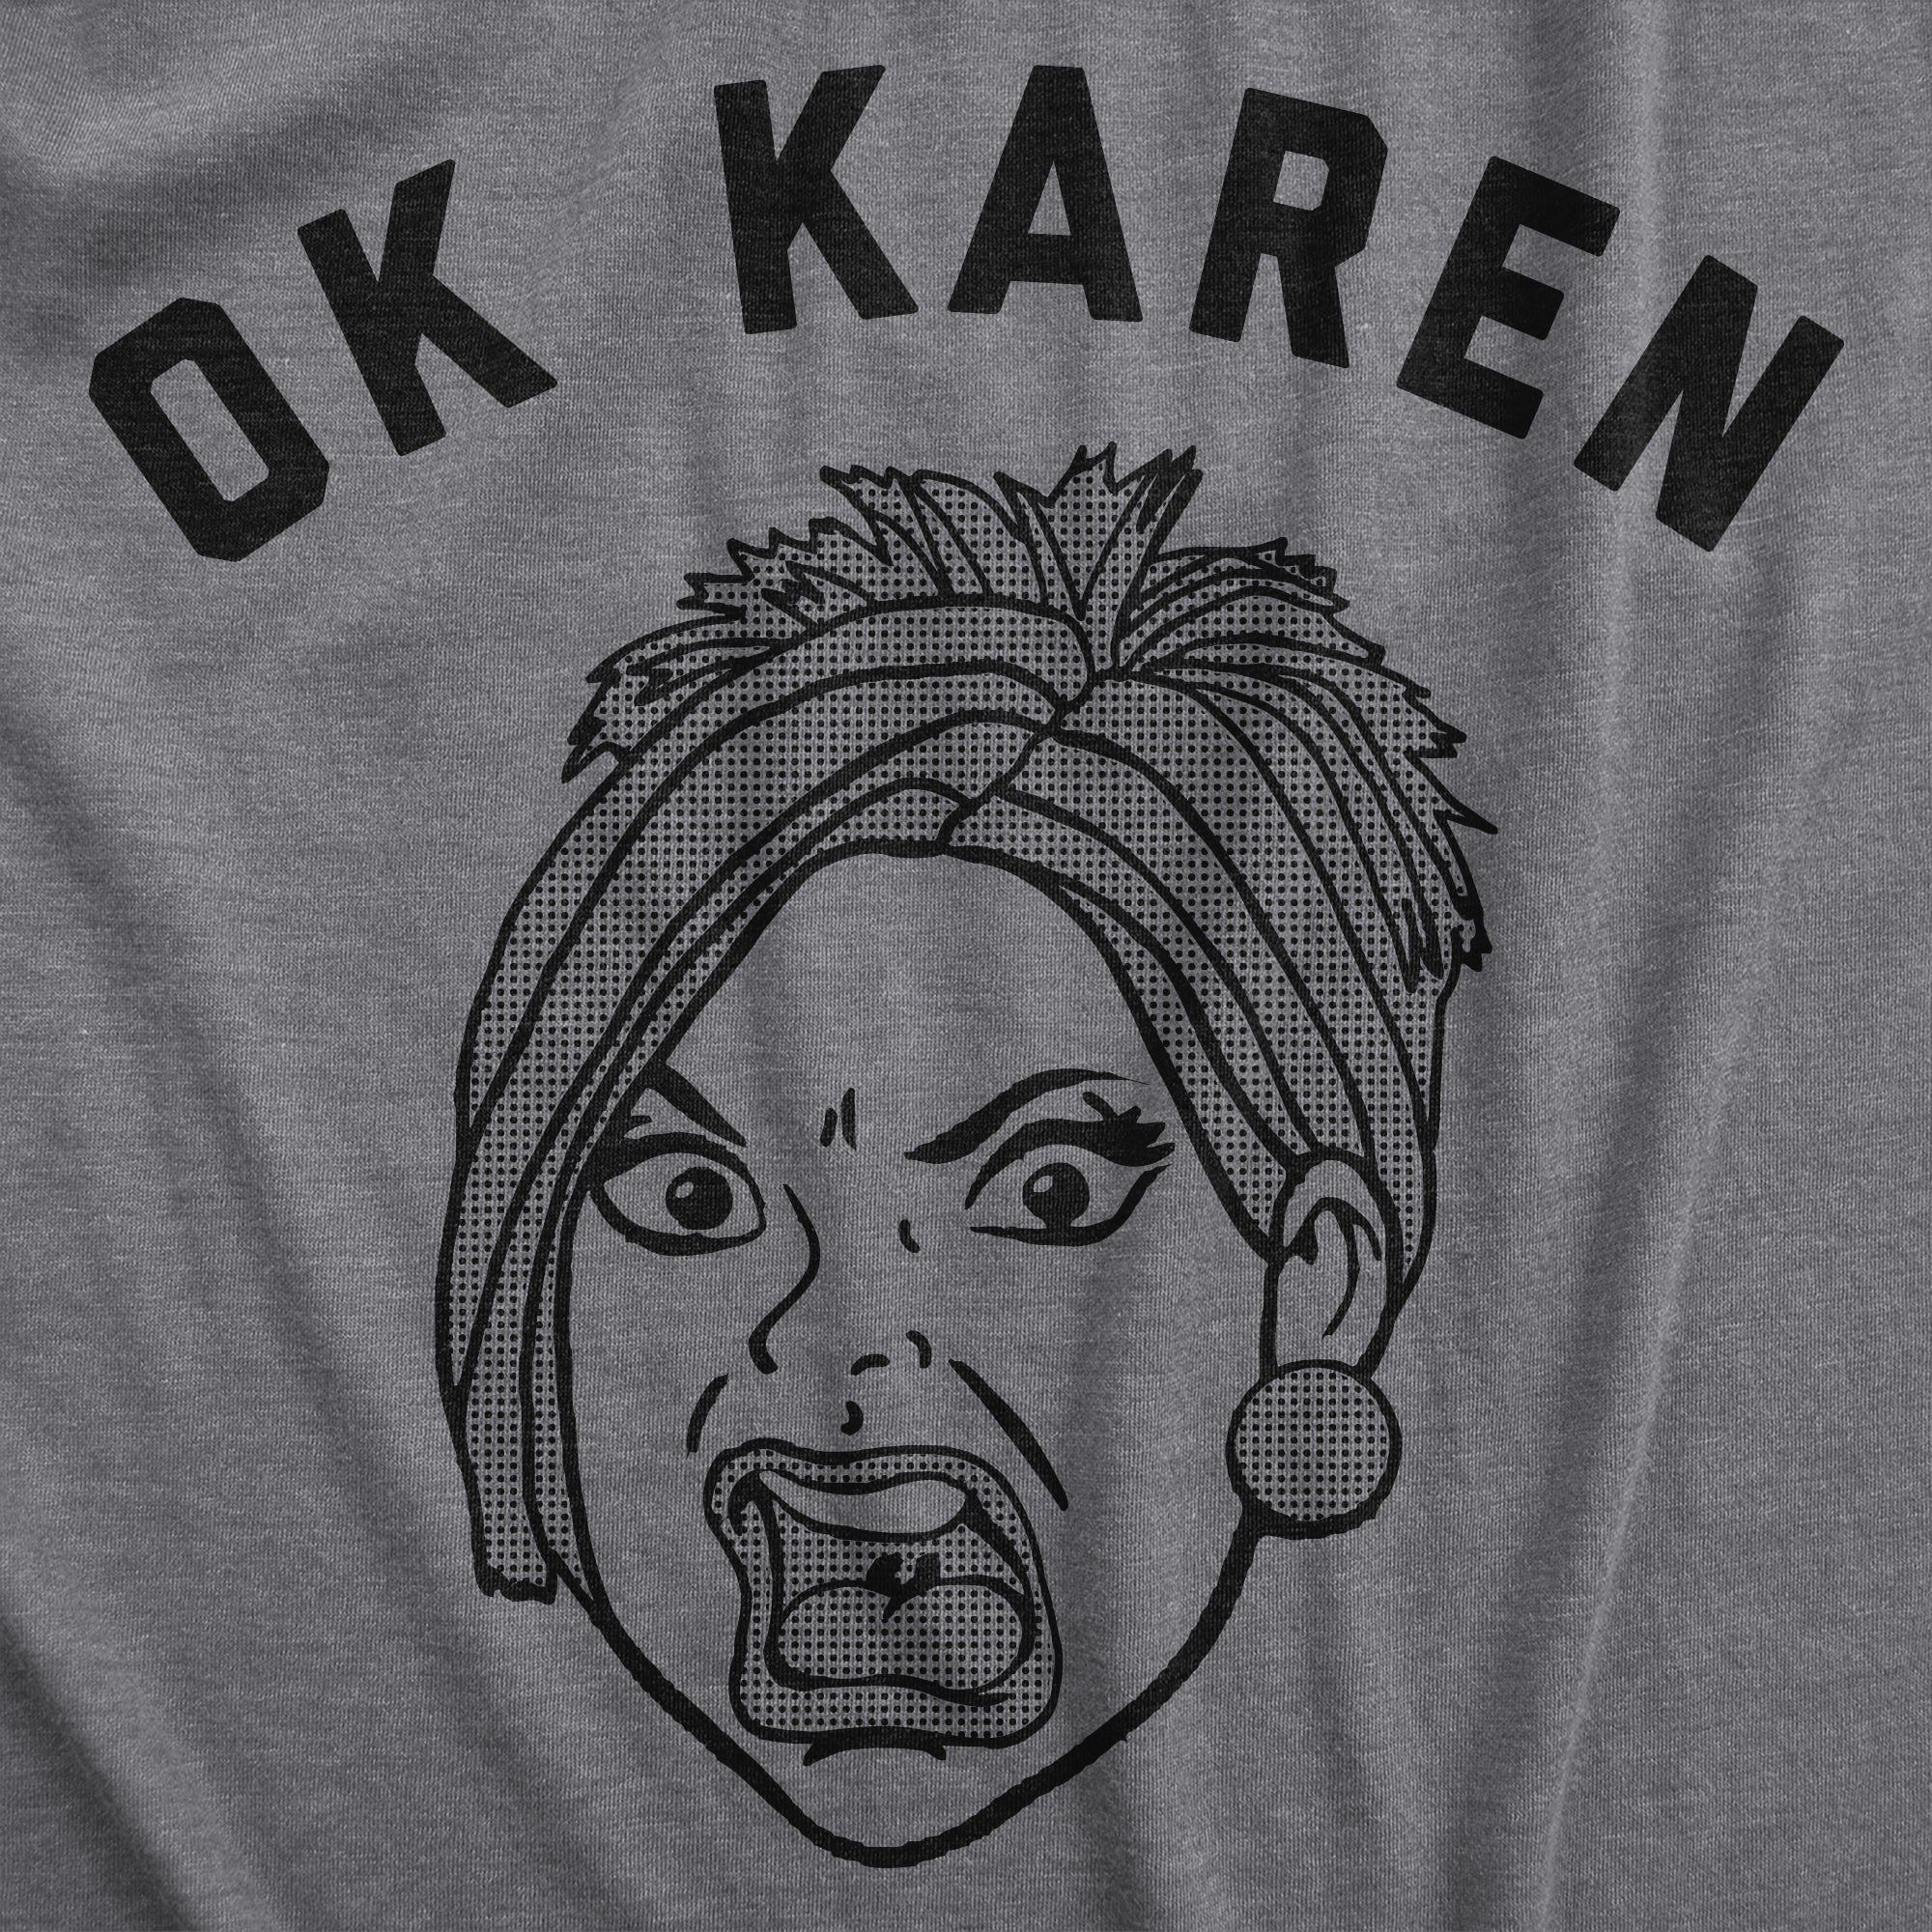 Funny Dark Heather Grey - KAREN Ok Karen Face Mens T Shirt Nerdy Sarcastic Tee